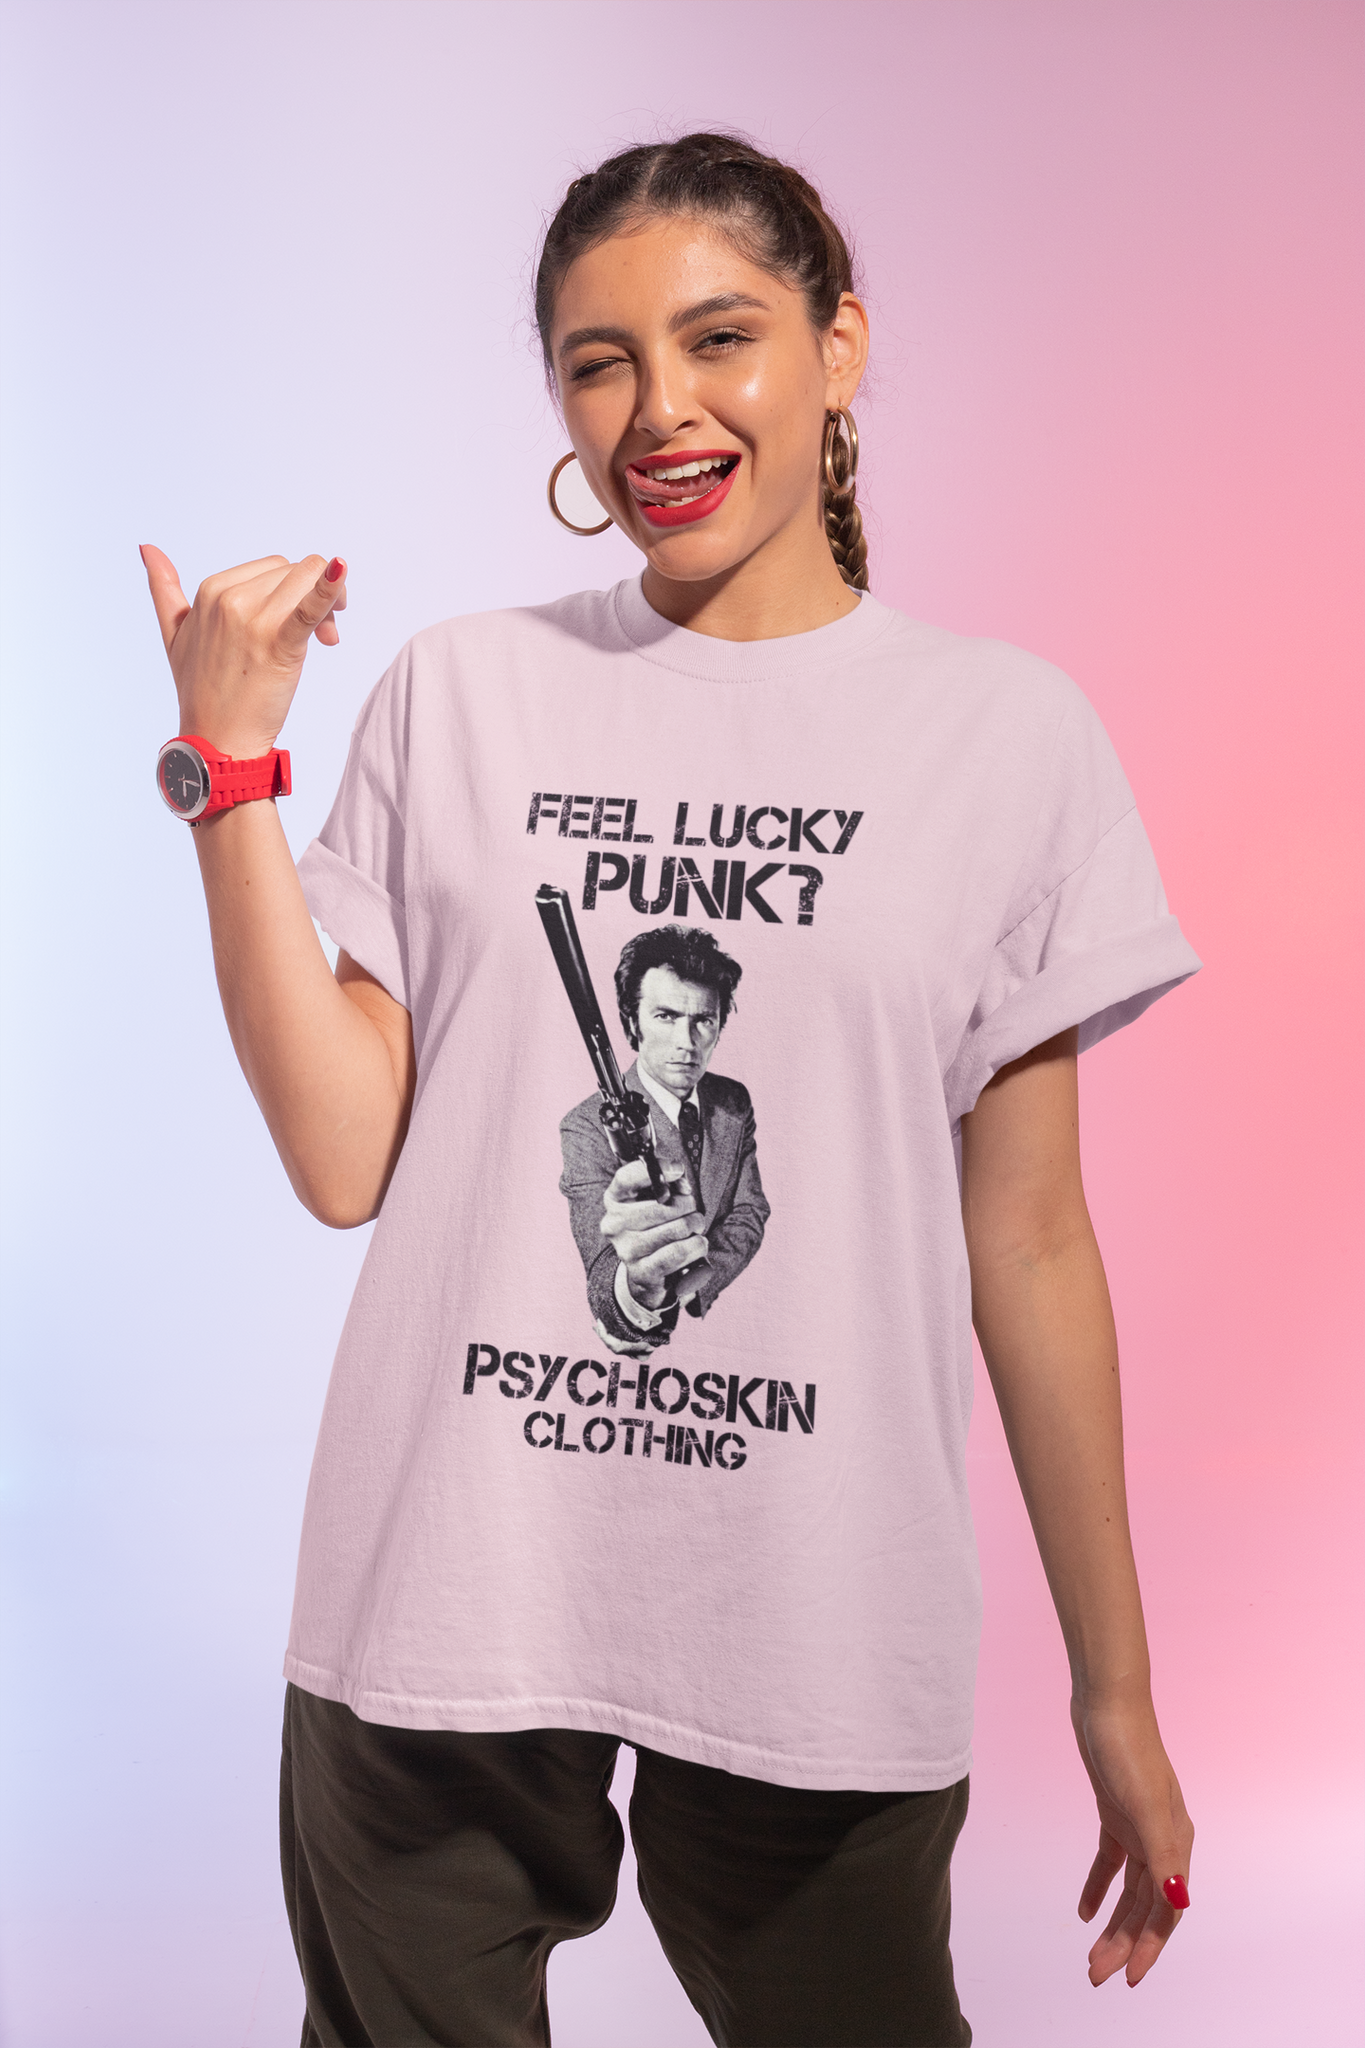 Dirty Harry Movie T Shirt, Harry Callahan T Shirt, Feel Lucky Punk Psychoskin Clothing Tshirt